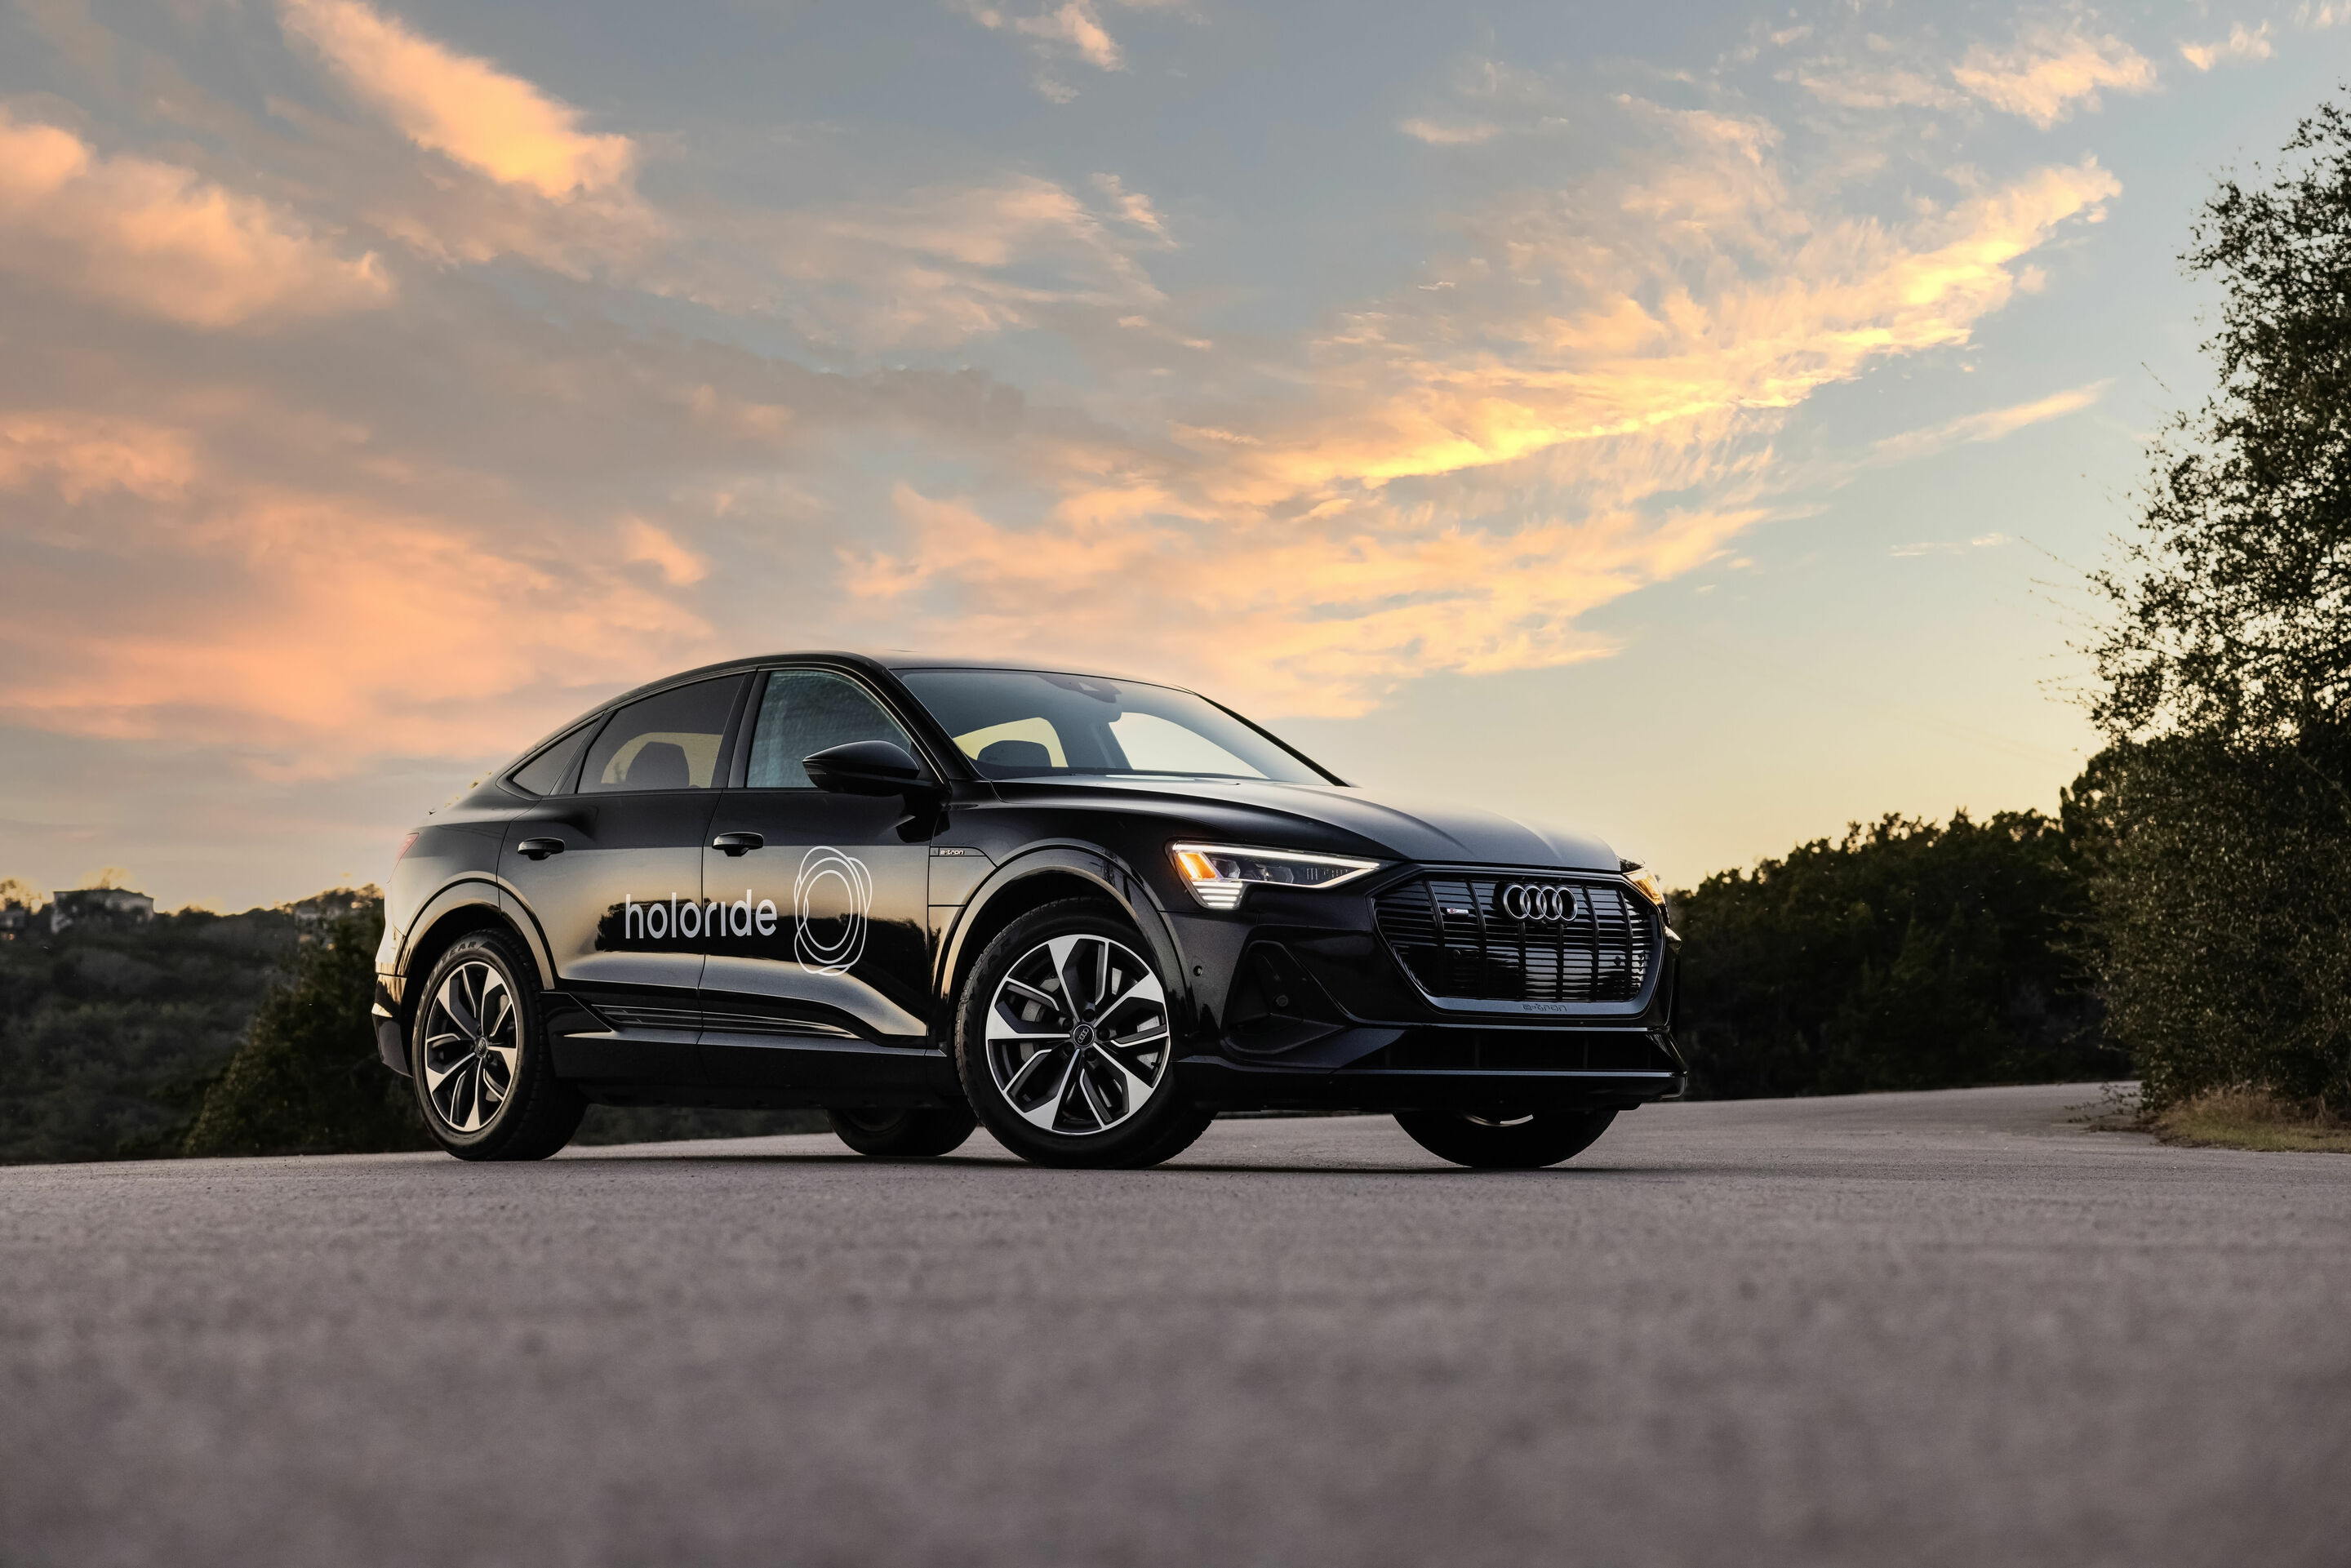 Audi x holoride – South by Southwest® (SXSW) 2022